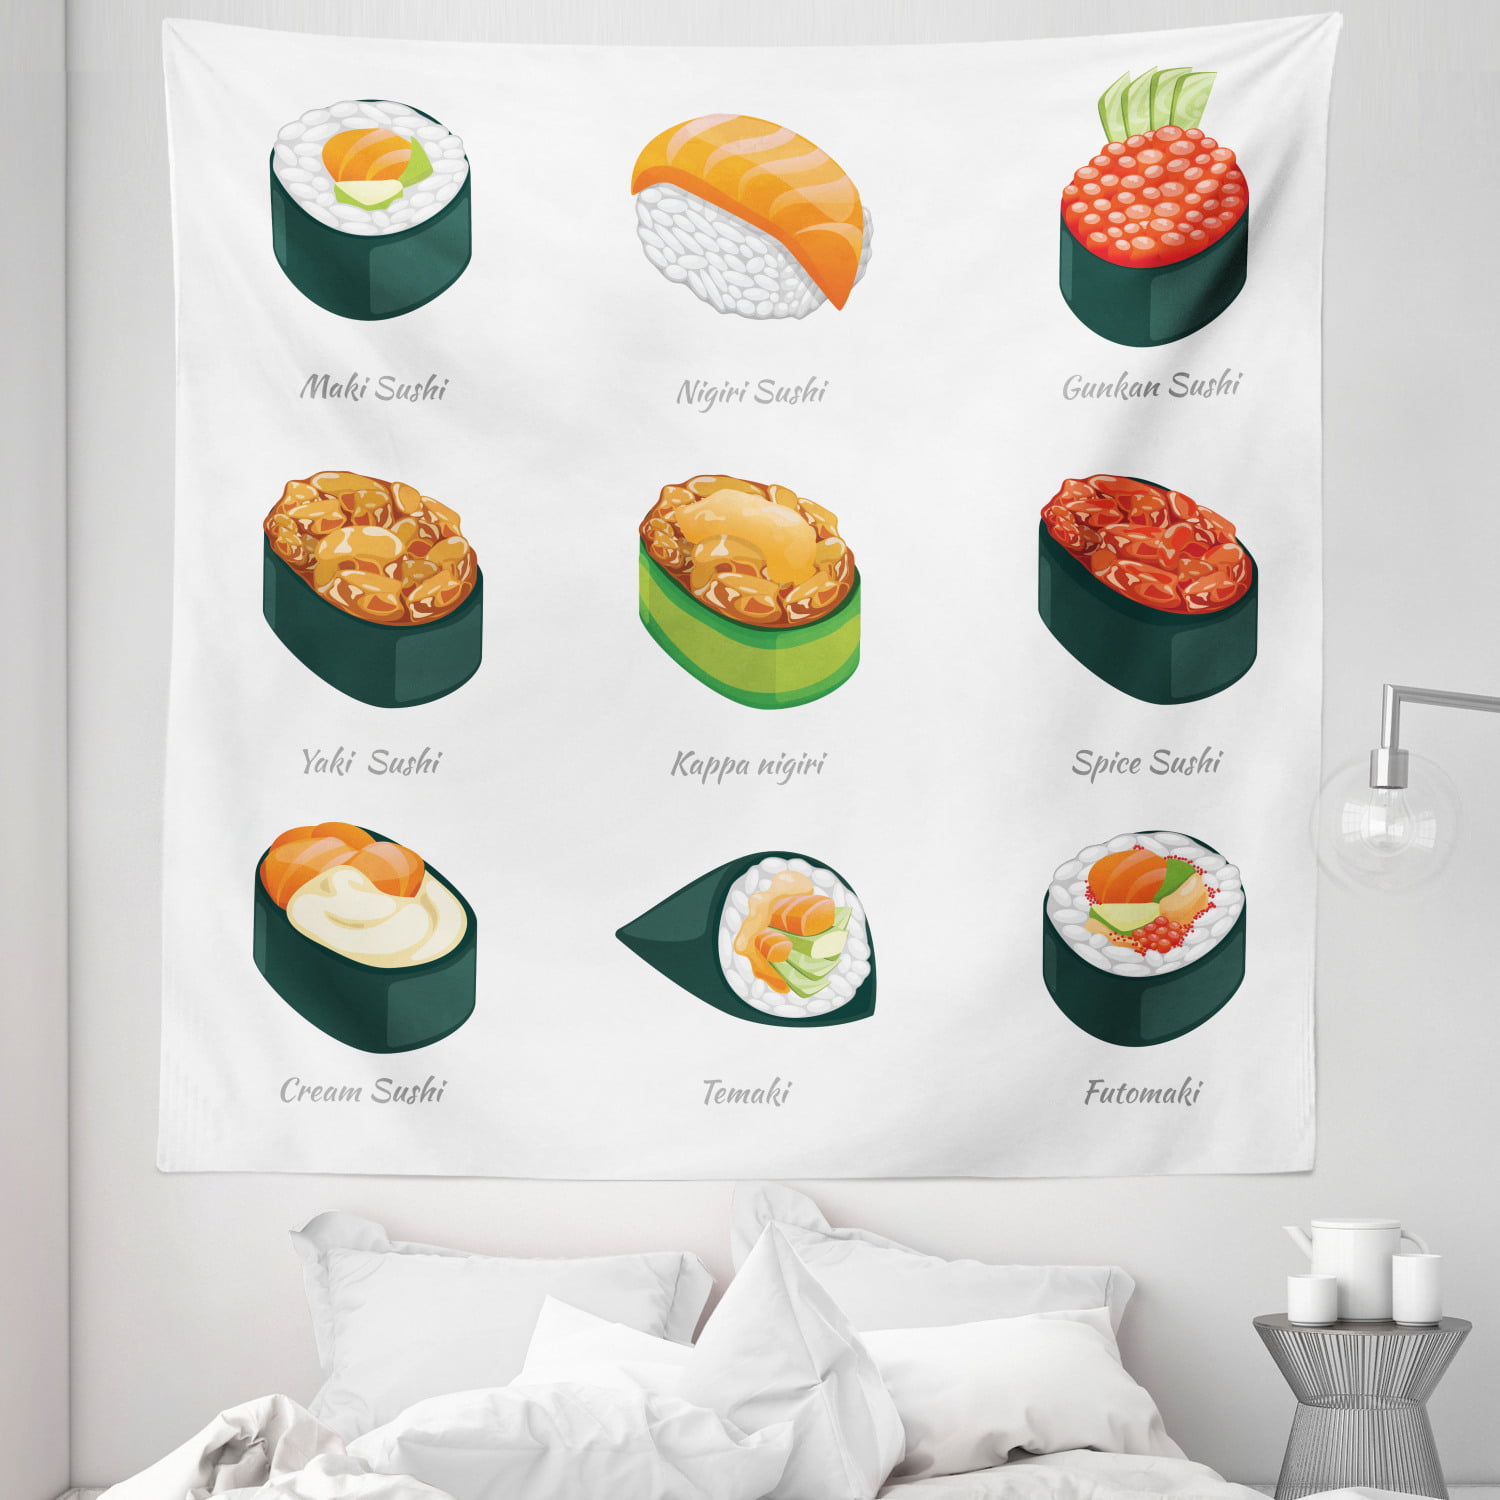 Sushi board - assorted nigiri, futomaki, hosomaki food Poster